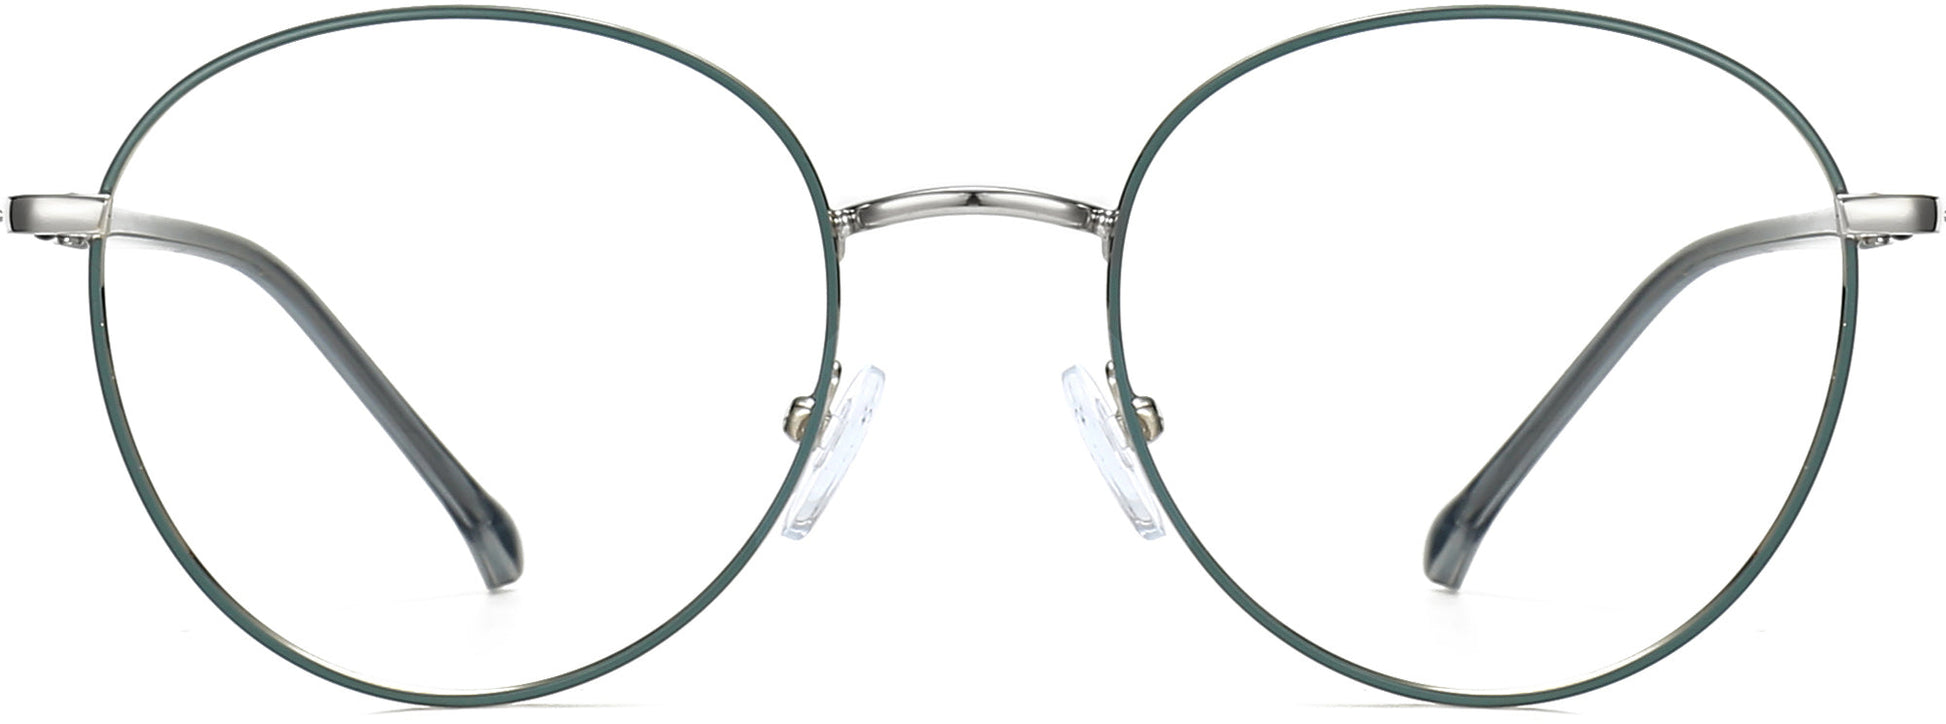 Jamari Round Silver Eyeglasses from ANRRI, front view